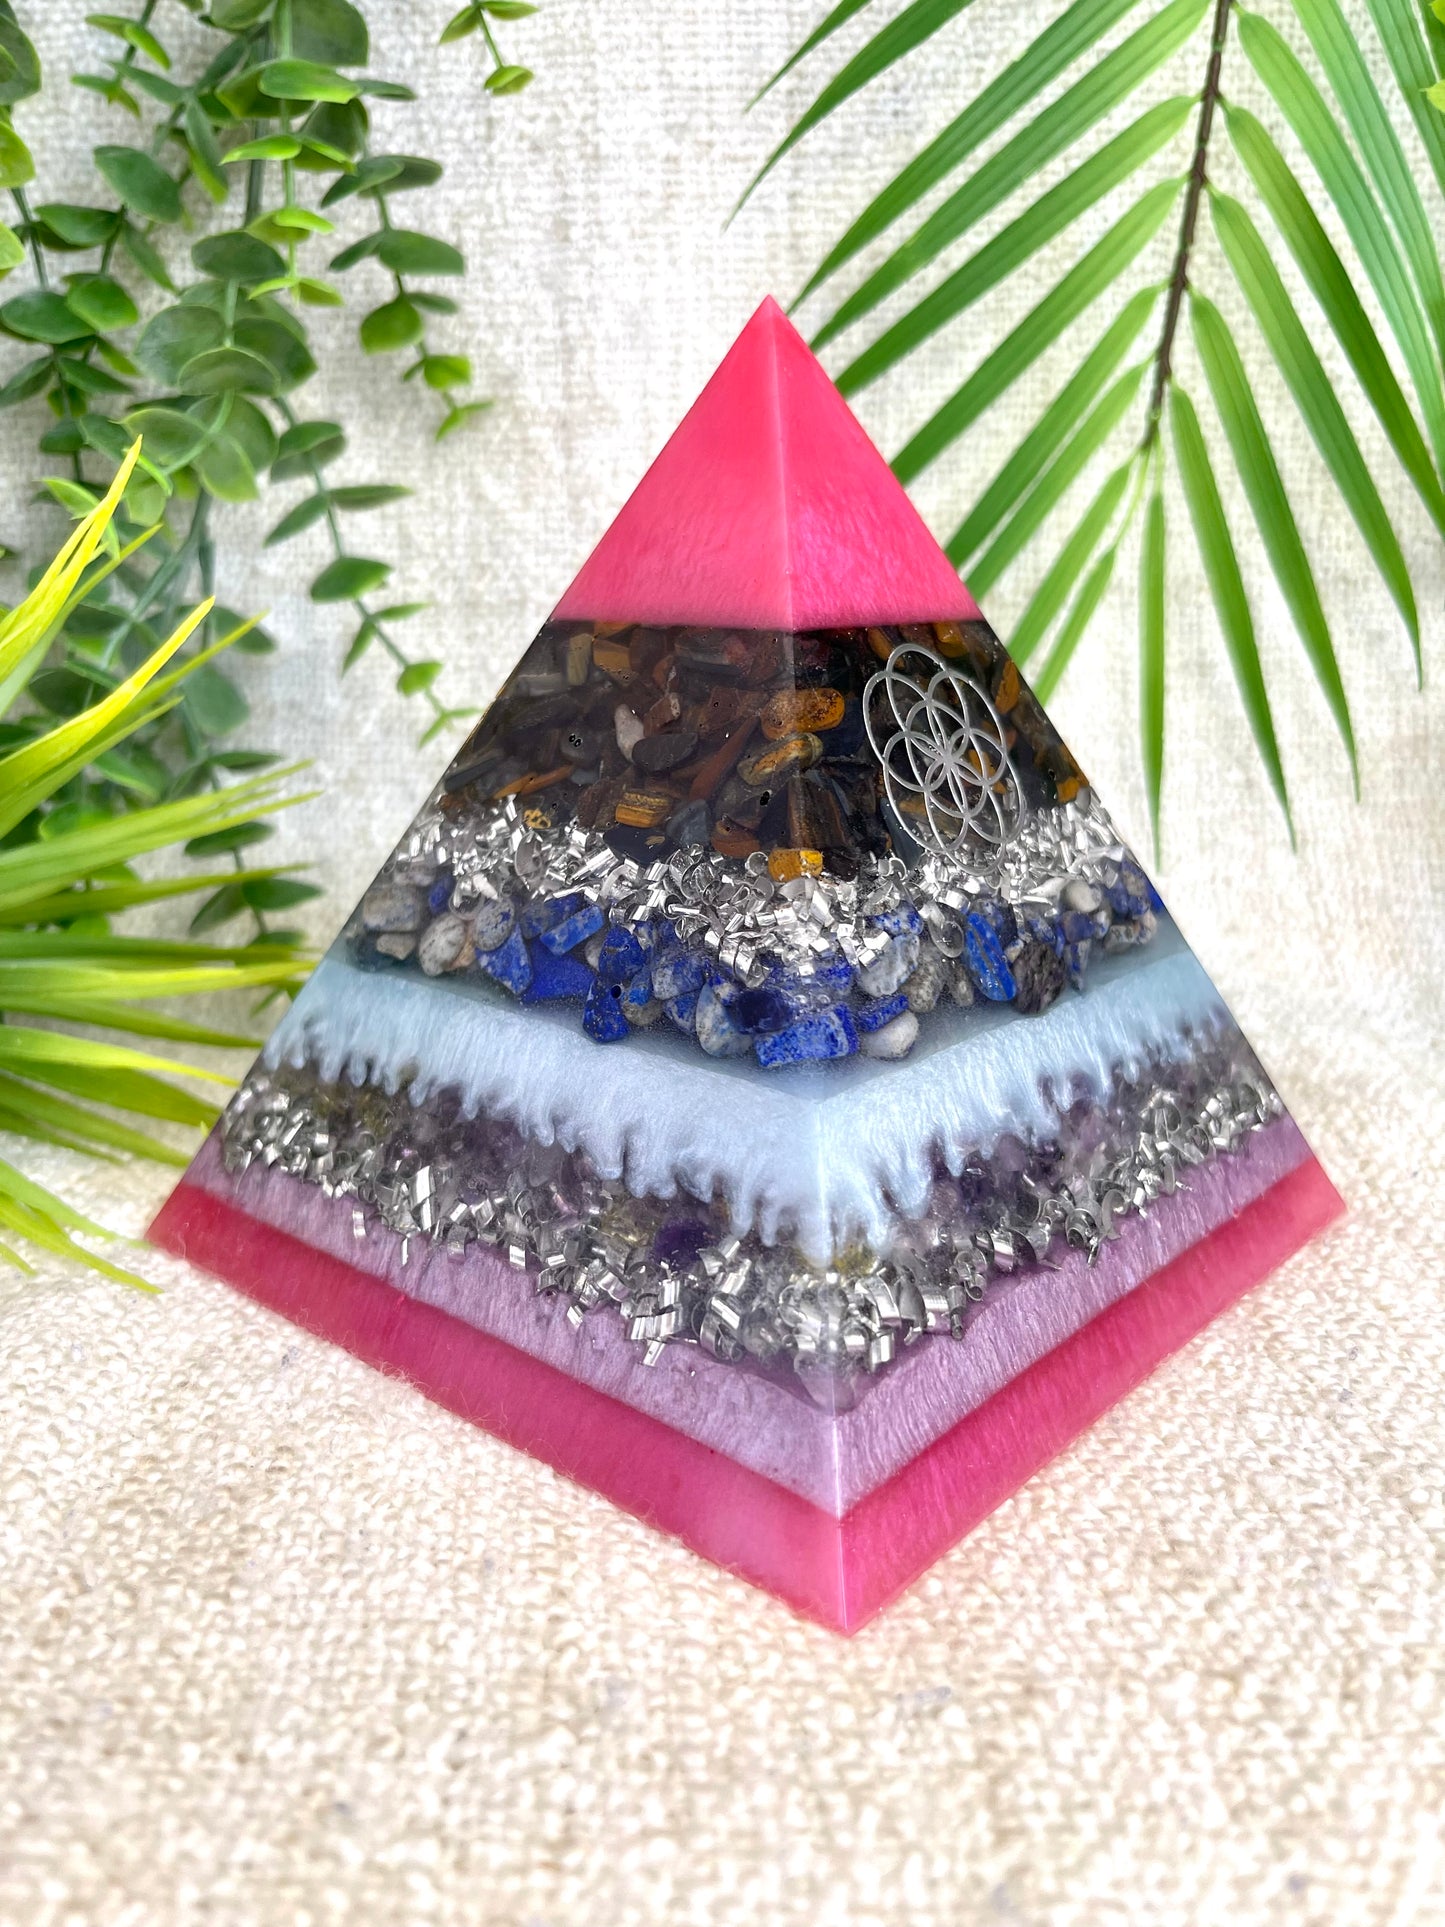 LIBRA - Astrology Edition - Orgonite Pyramid - EMF Protector - Blue Tiger's Eye, Lapis Lazuli and Ametrine with Aluminum Metal